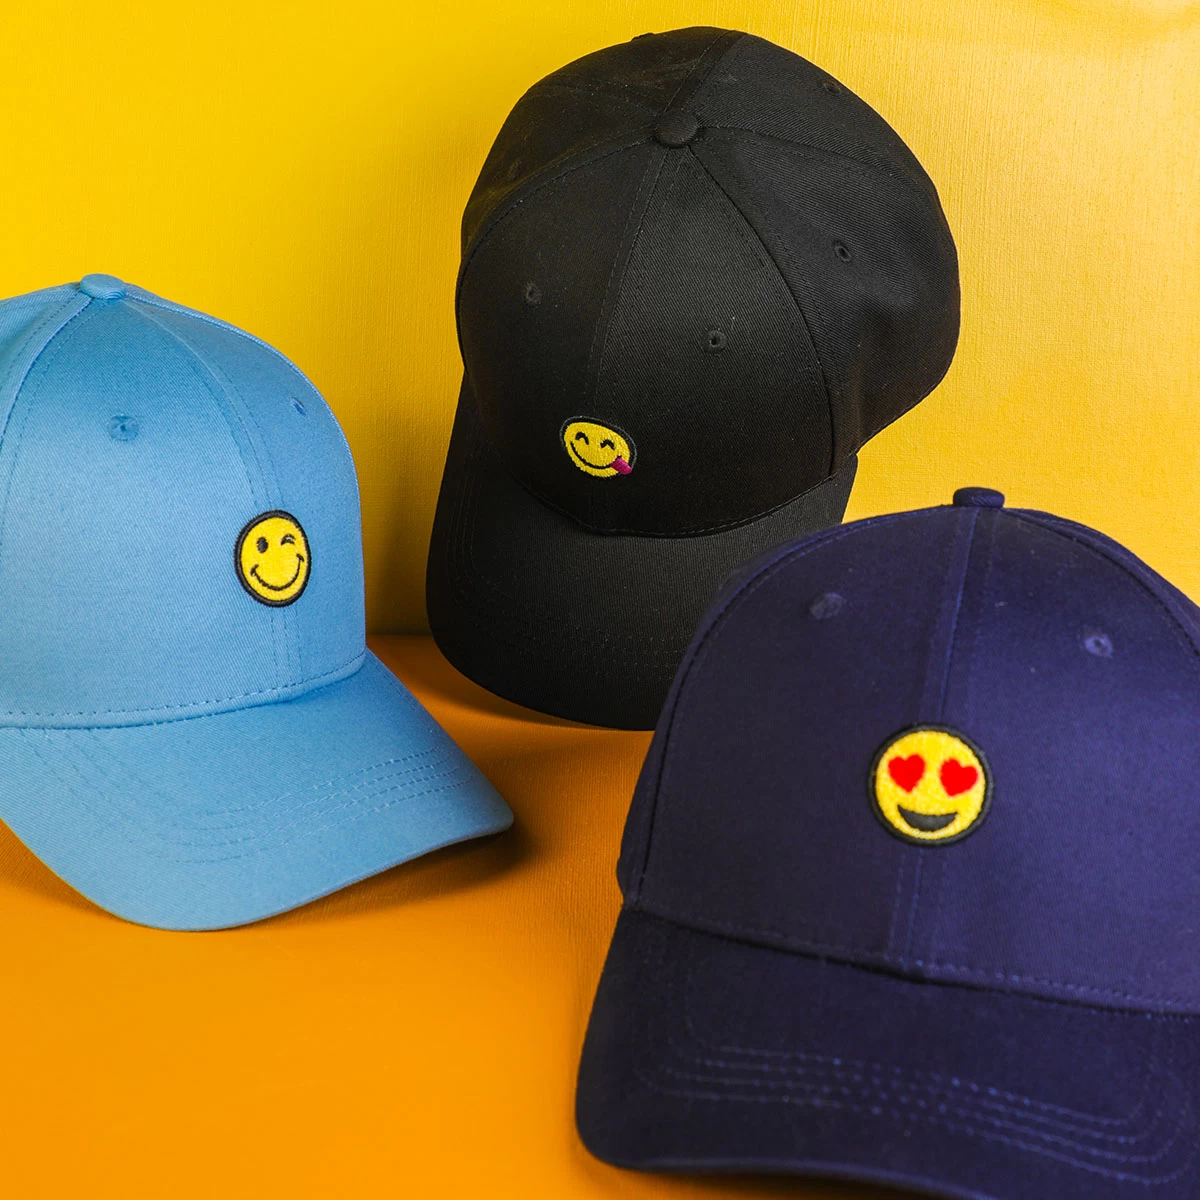 embroidered smiley face emoji logo sports cotton baseball hats